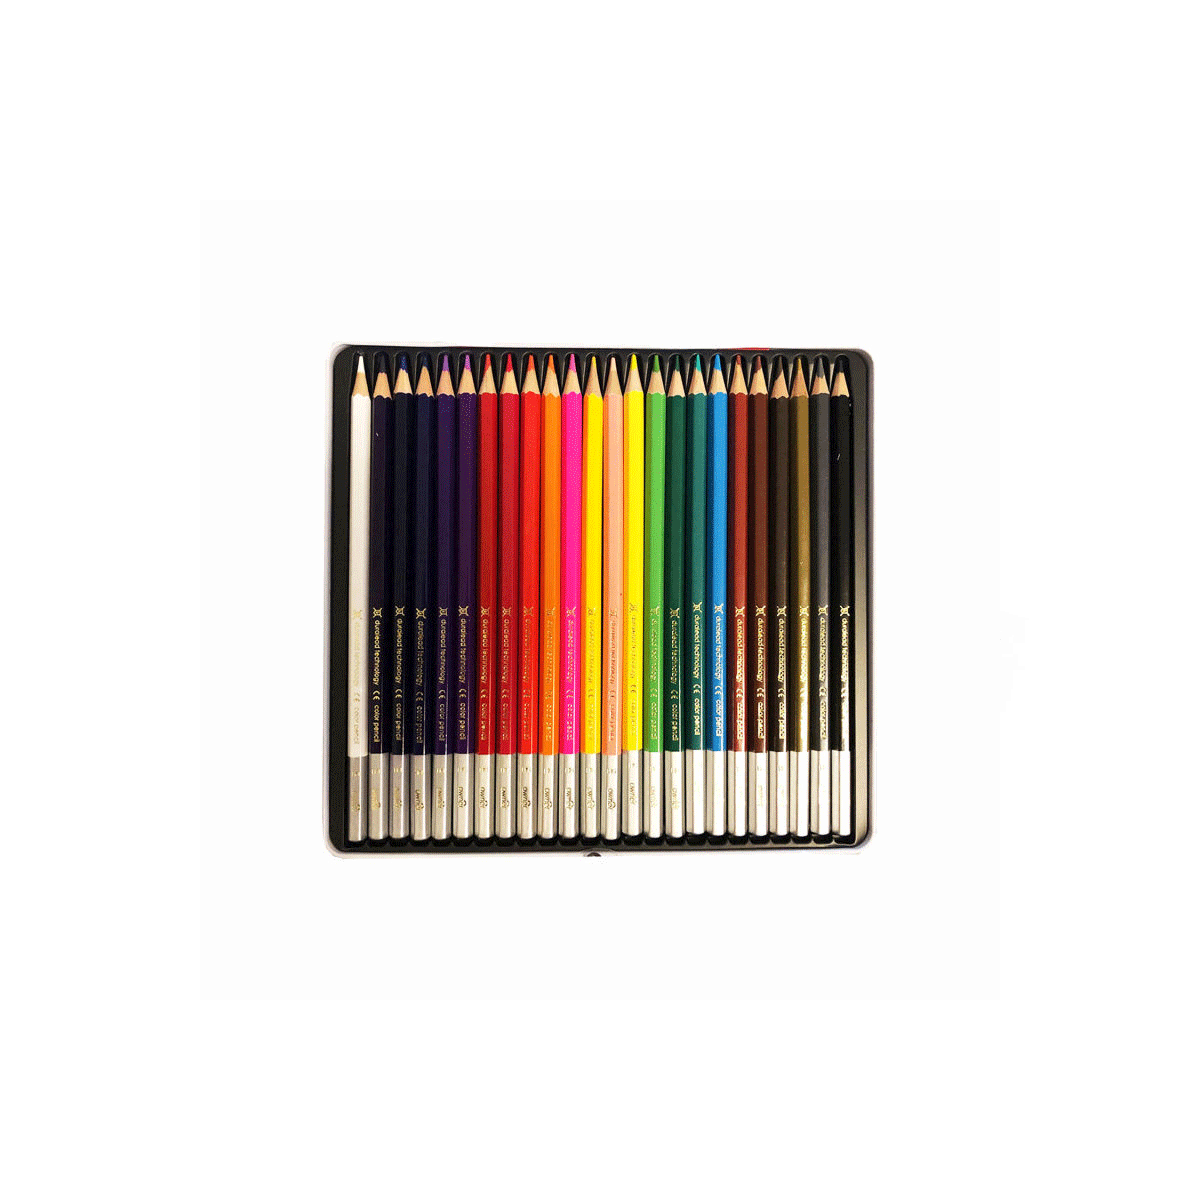 مداد رنگی 24 فلزی تخت / اونر